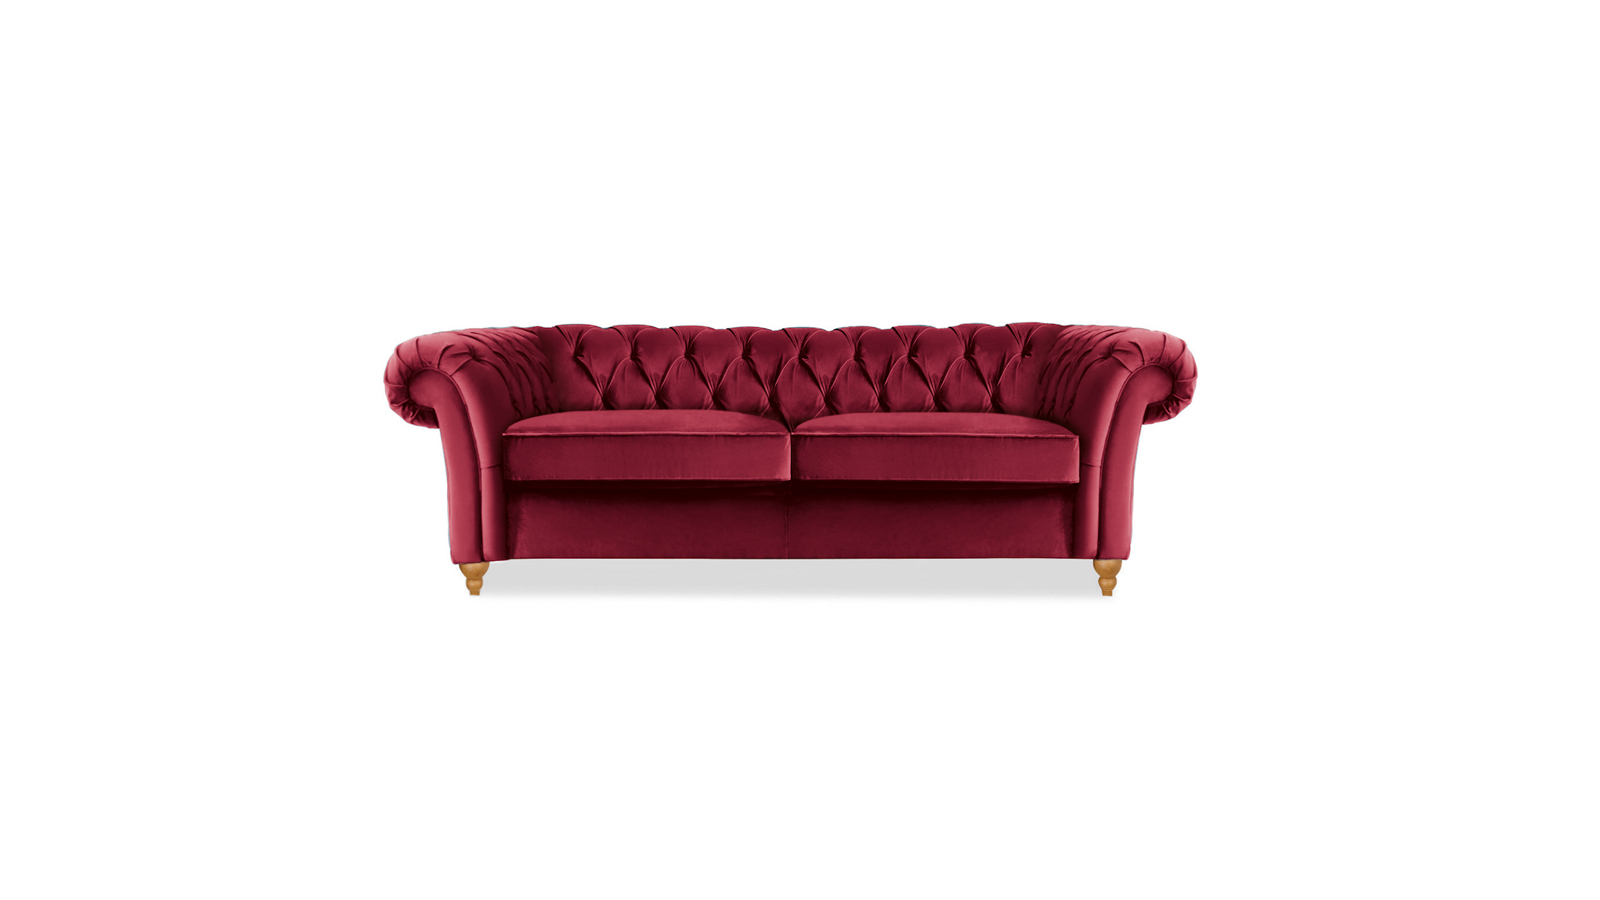 Gosford sofa